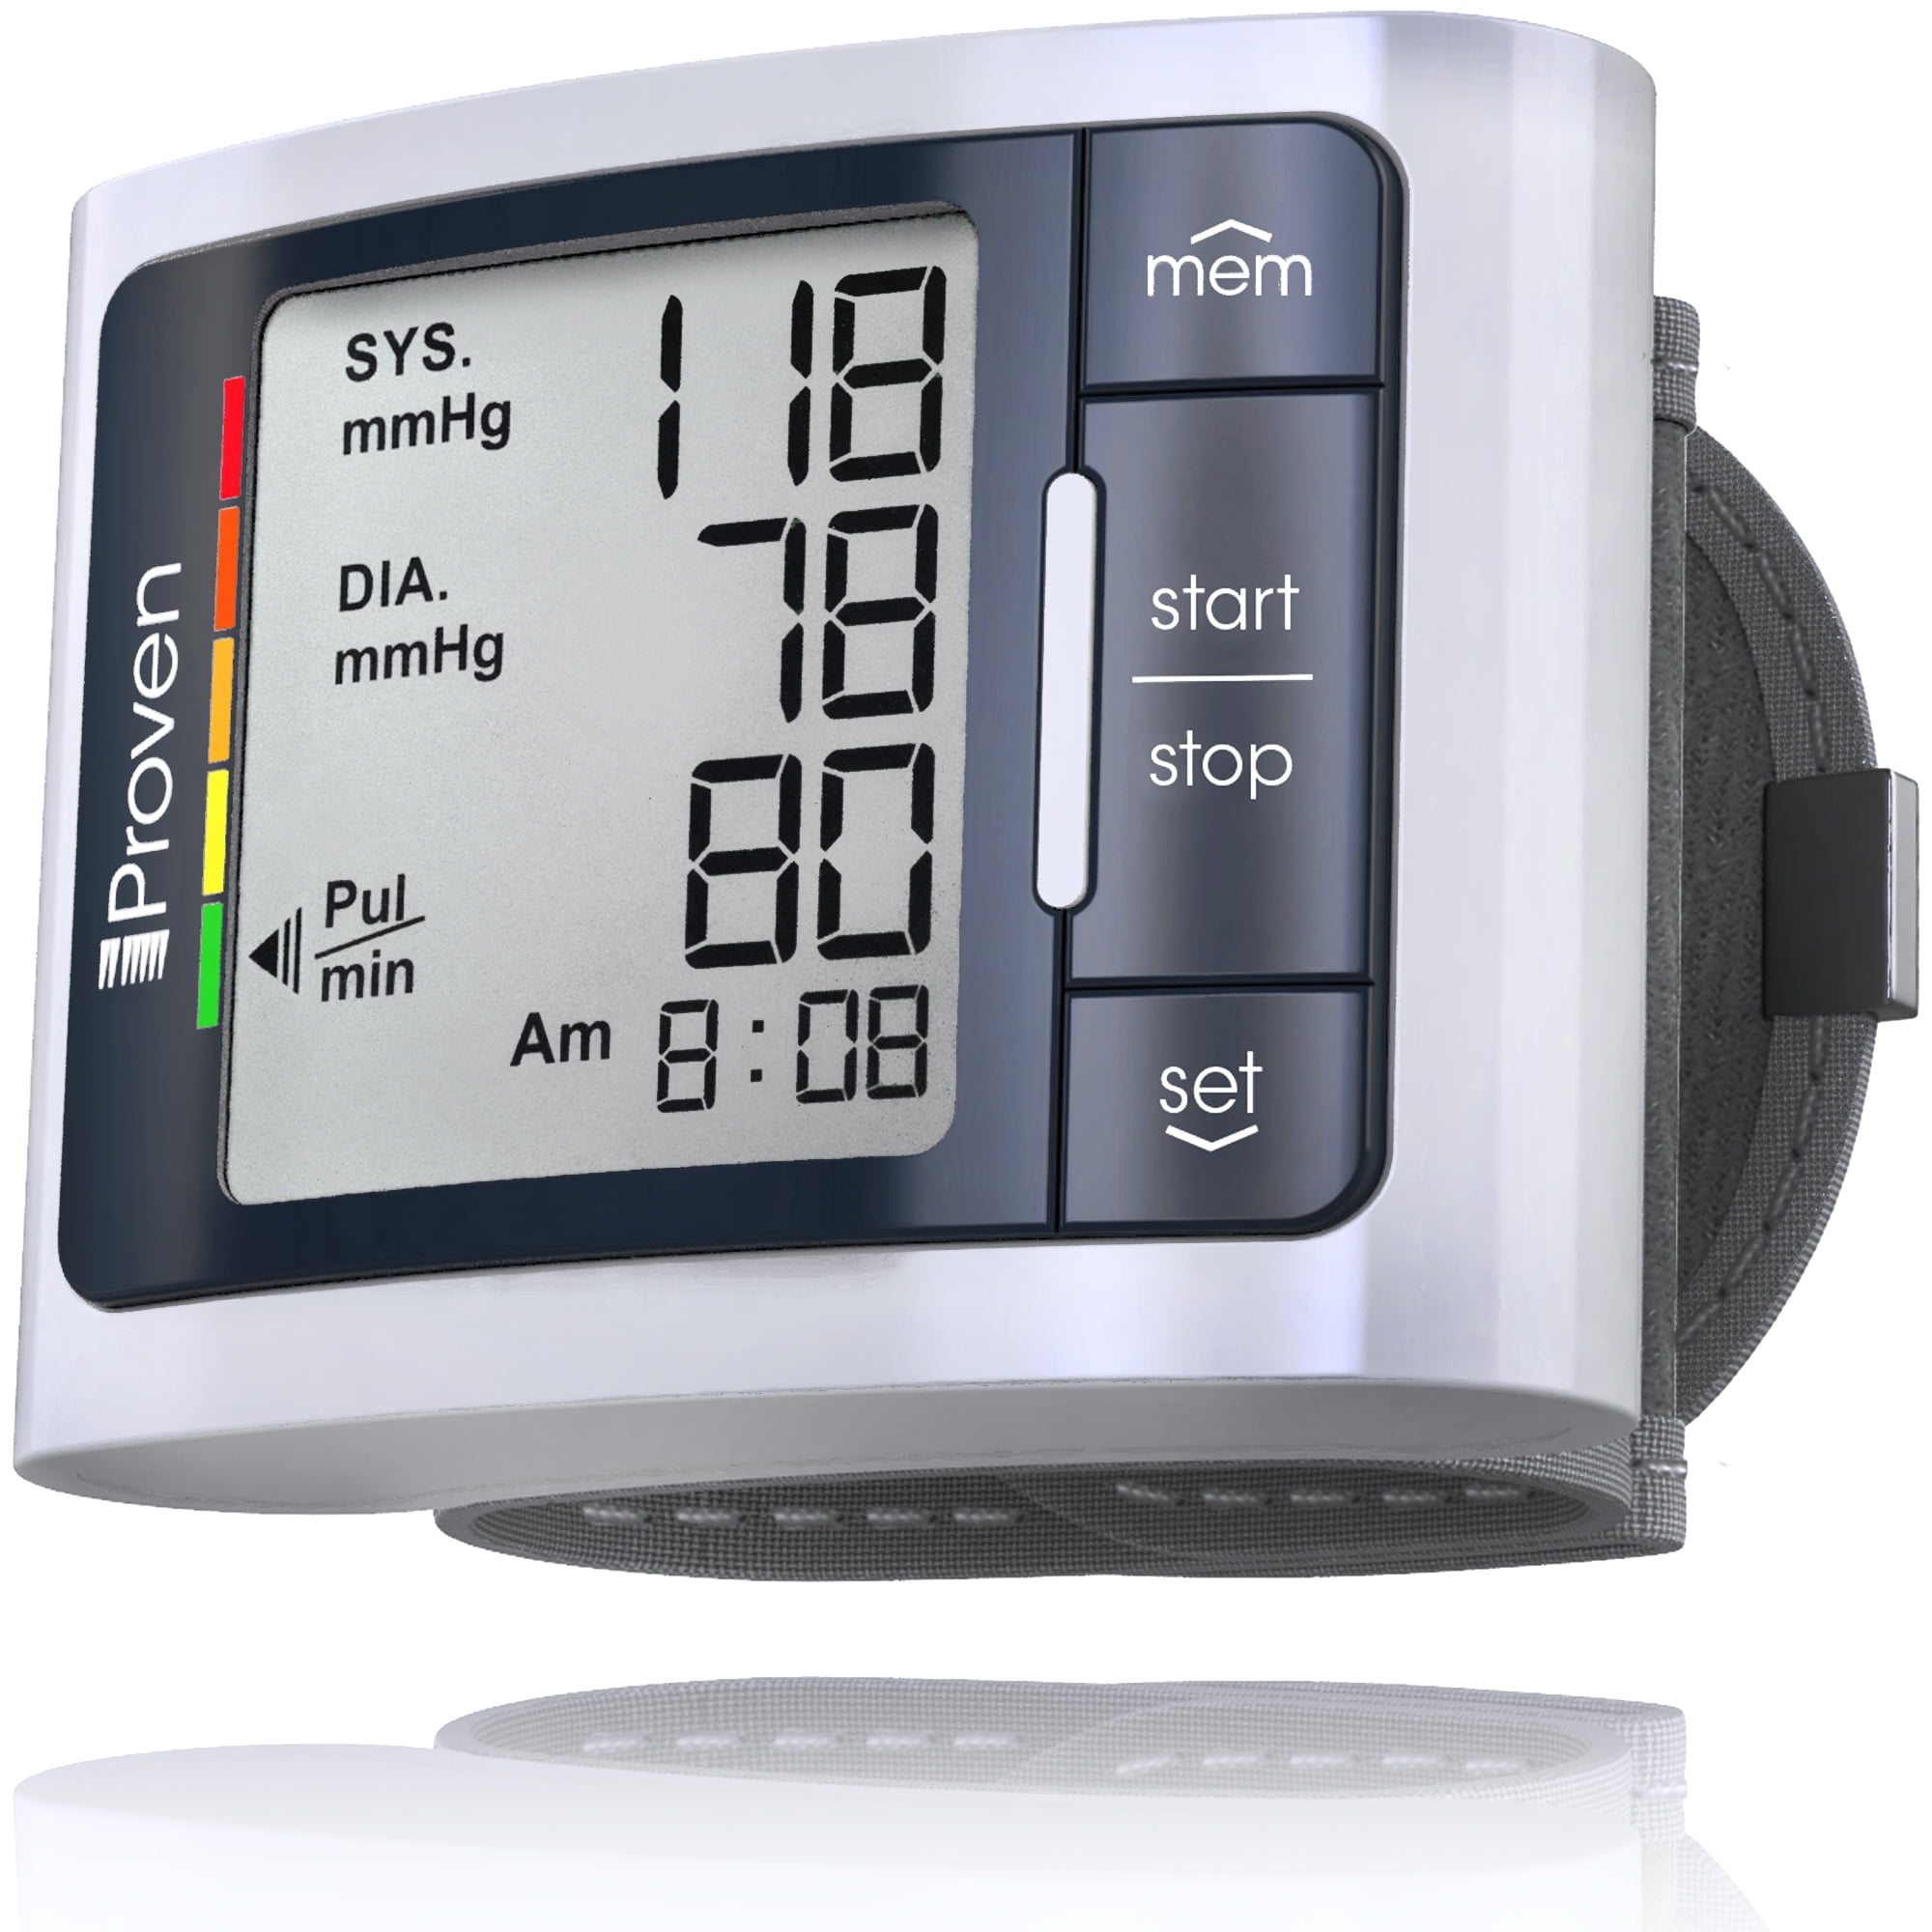 Iproven Blood Pressure Monitor Wrist Cuff For Home Use Bpm 337 Walmart Com Walmart Com